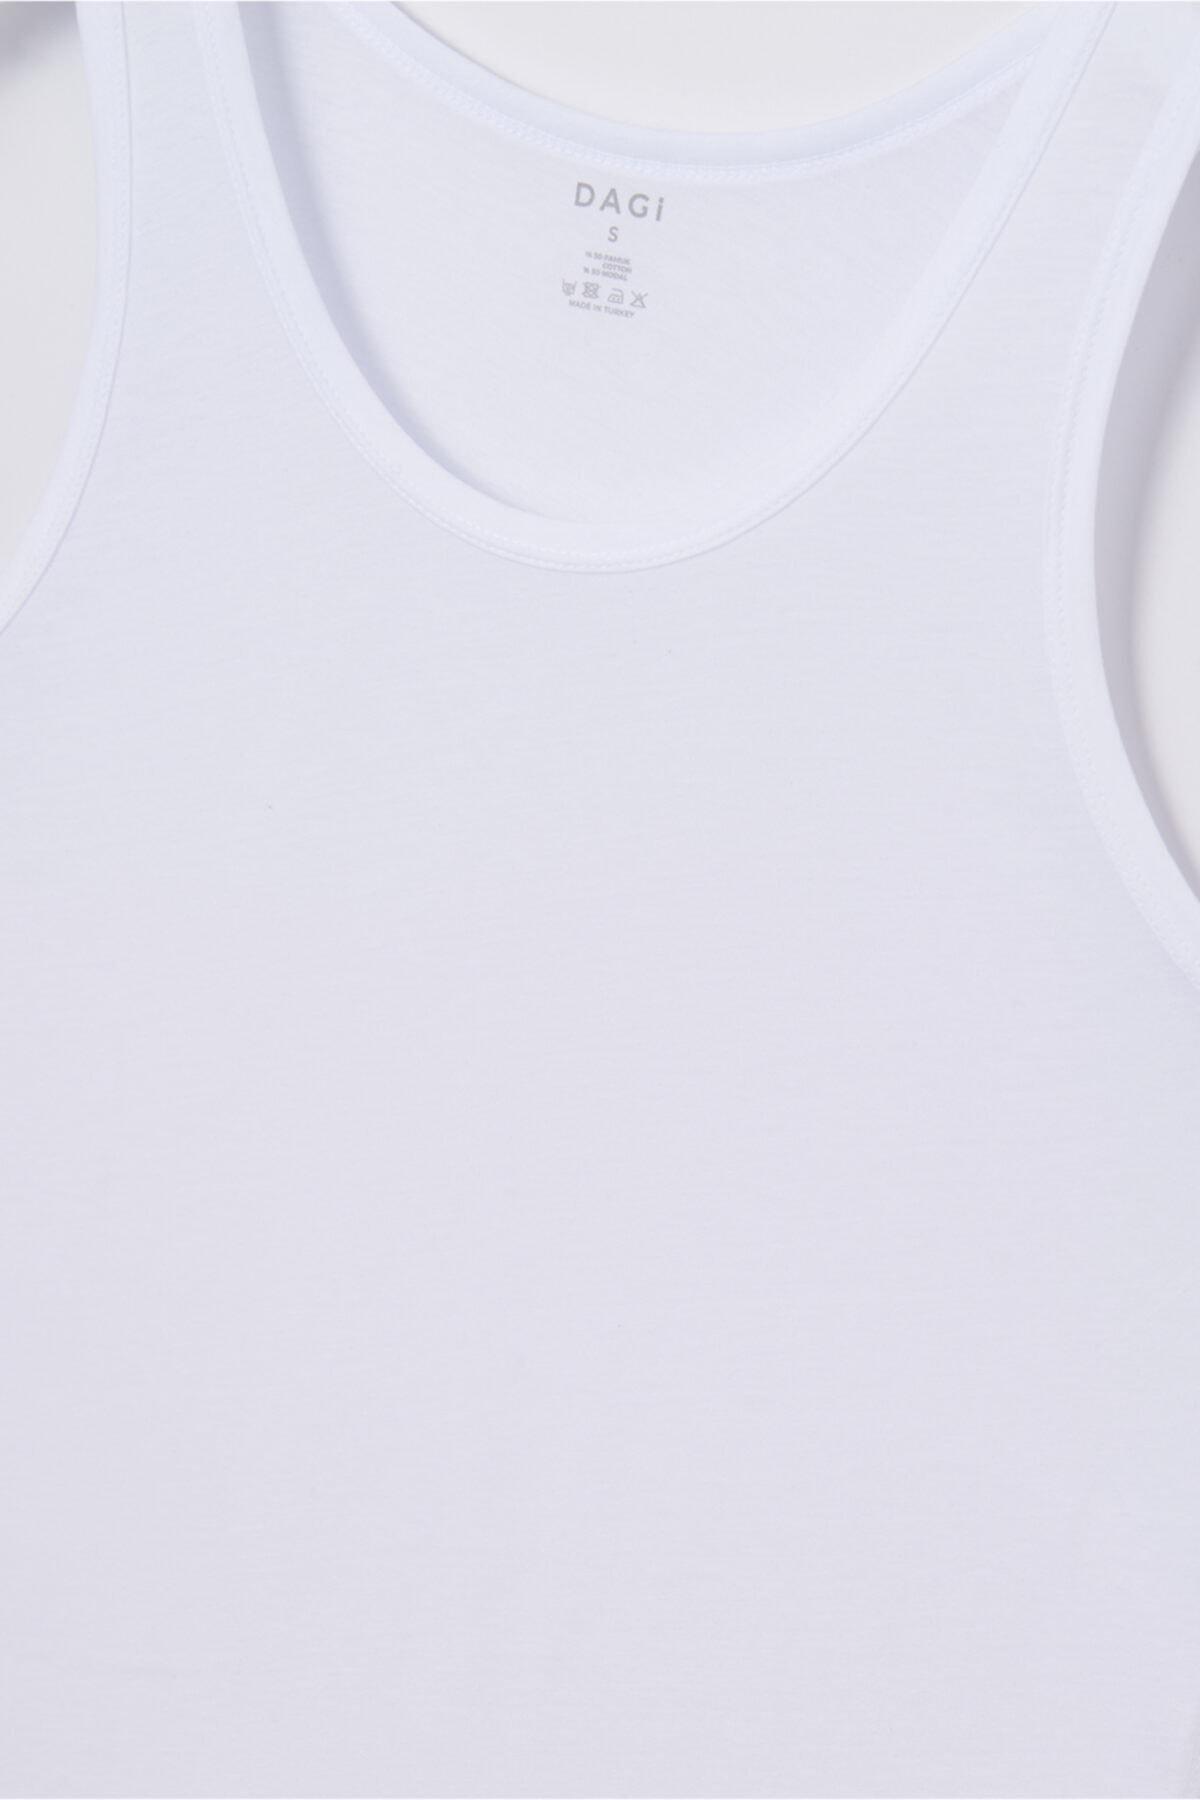 Dagi - White Modal Undershirt